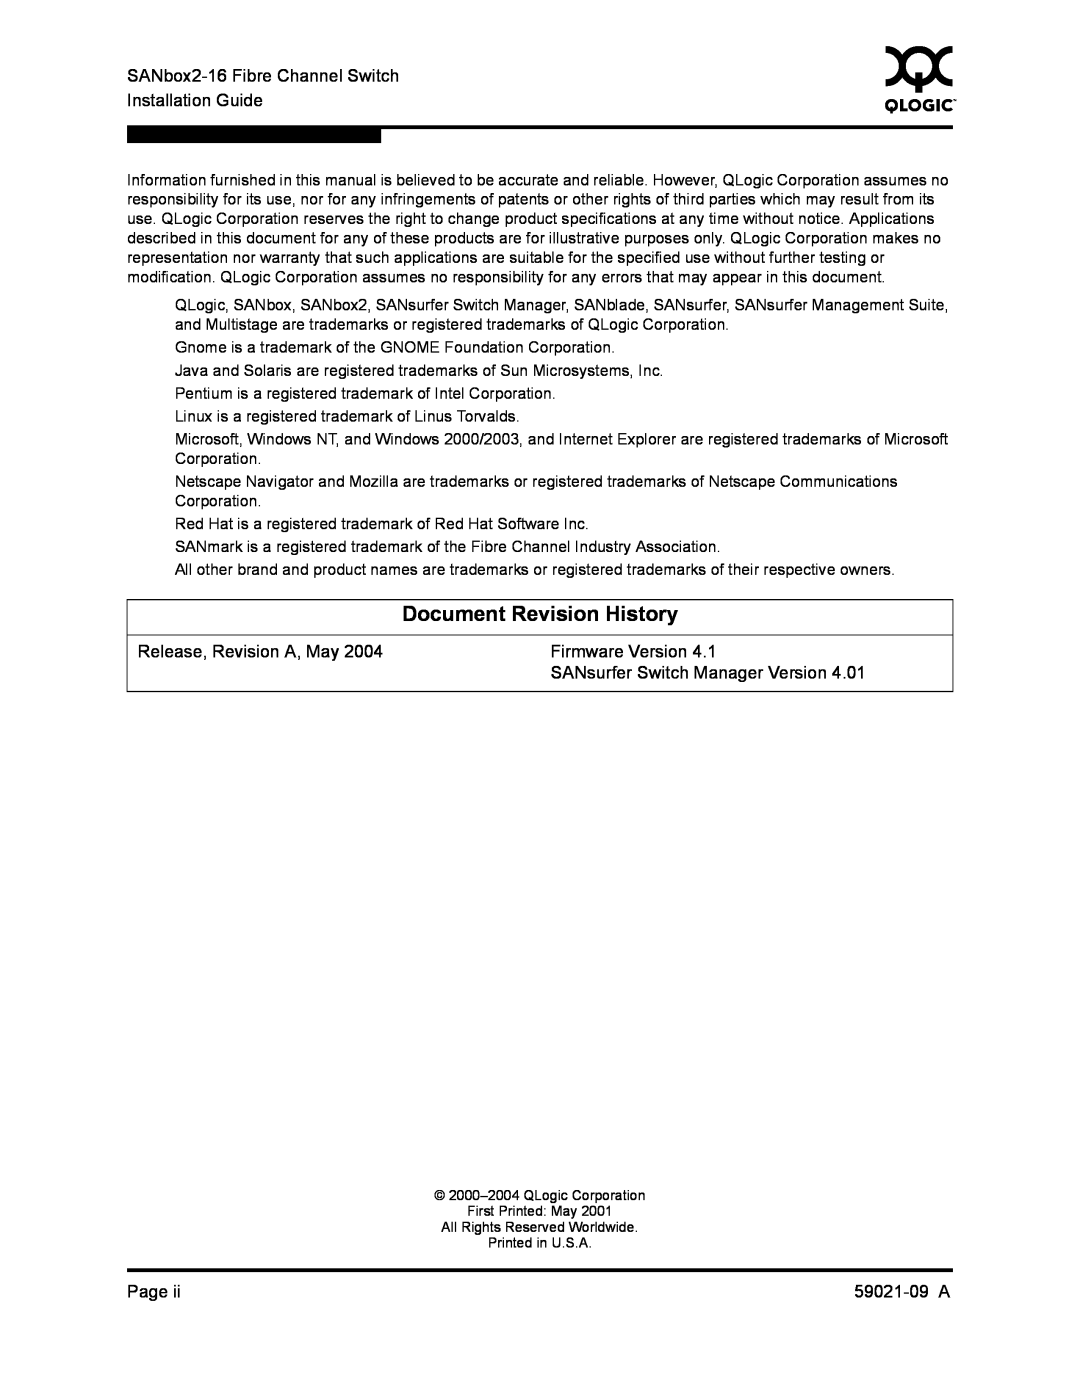 Q-Logic QLA2342, SB2A-16B manual Document Revision History 